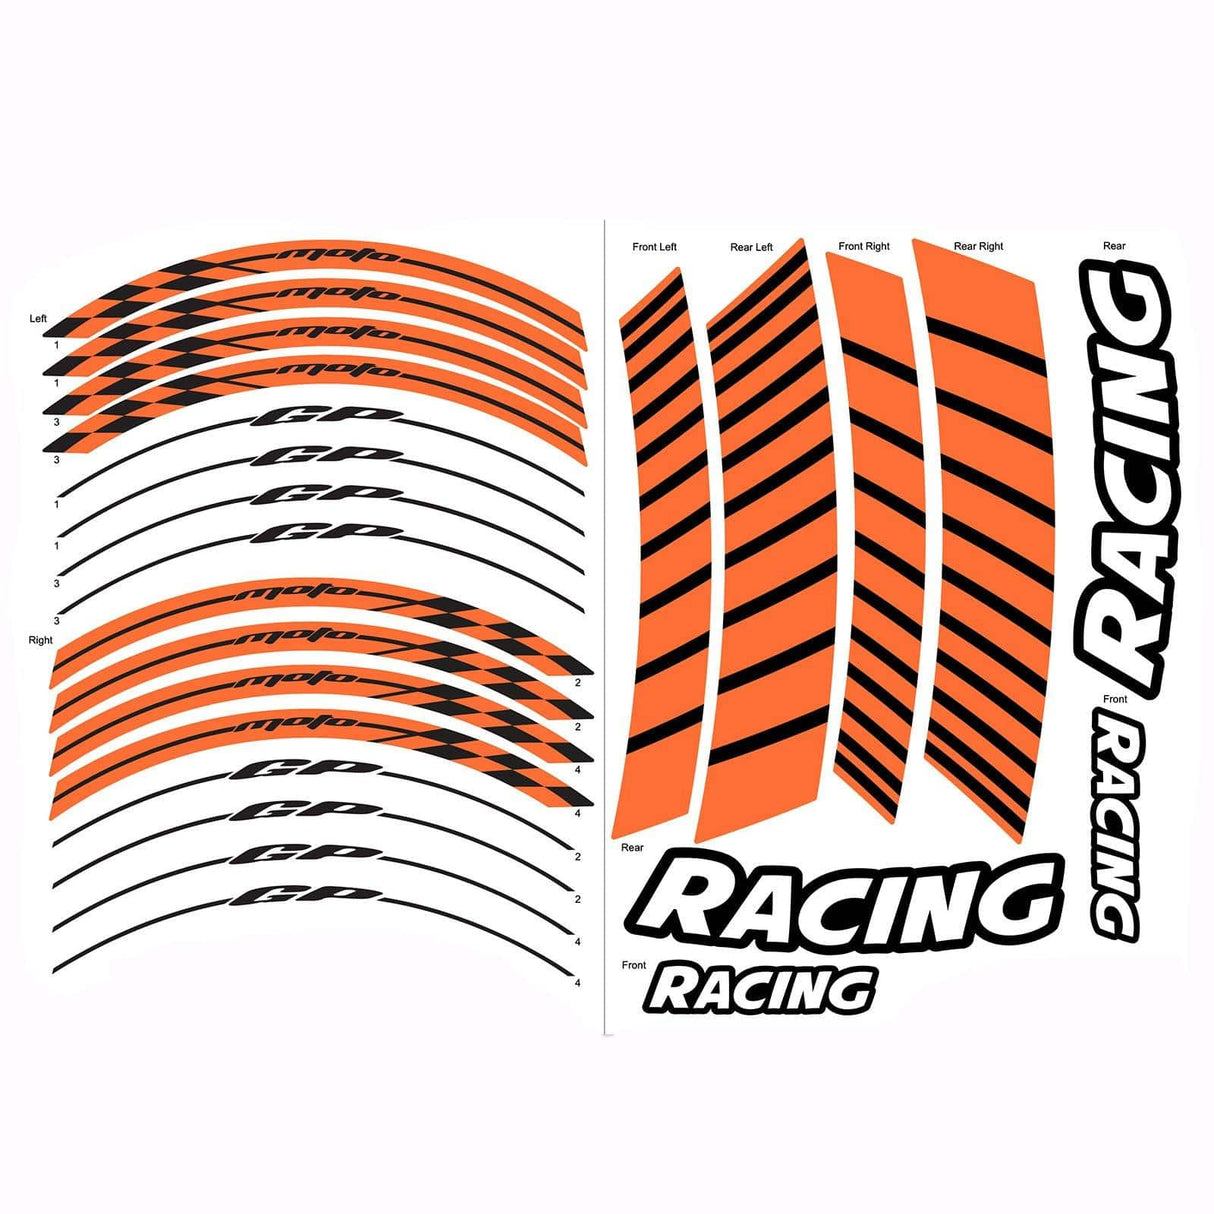 StickerBao Orange 17 inch GP04 Platinum Inner Edge Rim Sticker Universal Motorcycle Rim Wheel Decal Racing For Honda